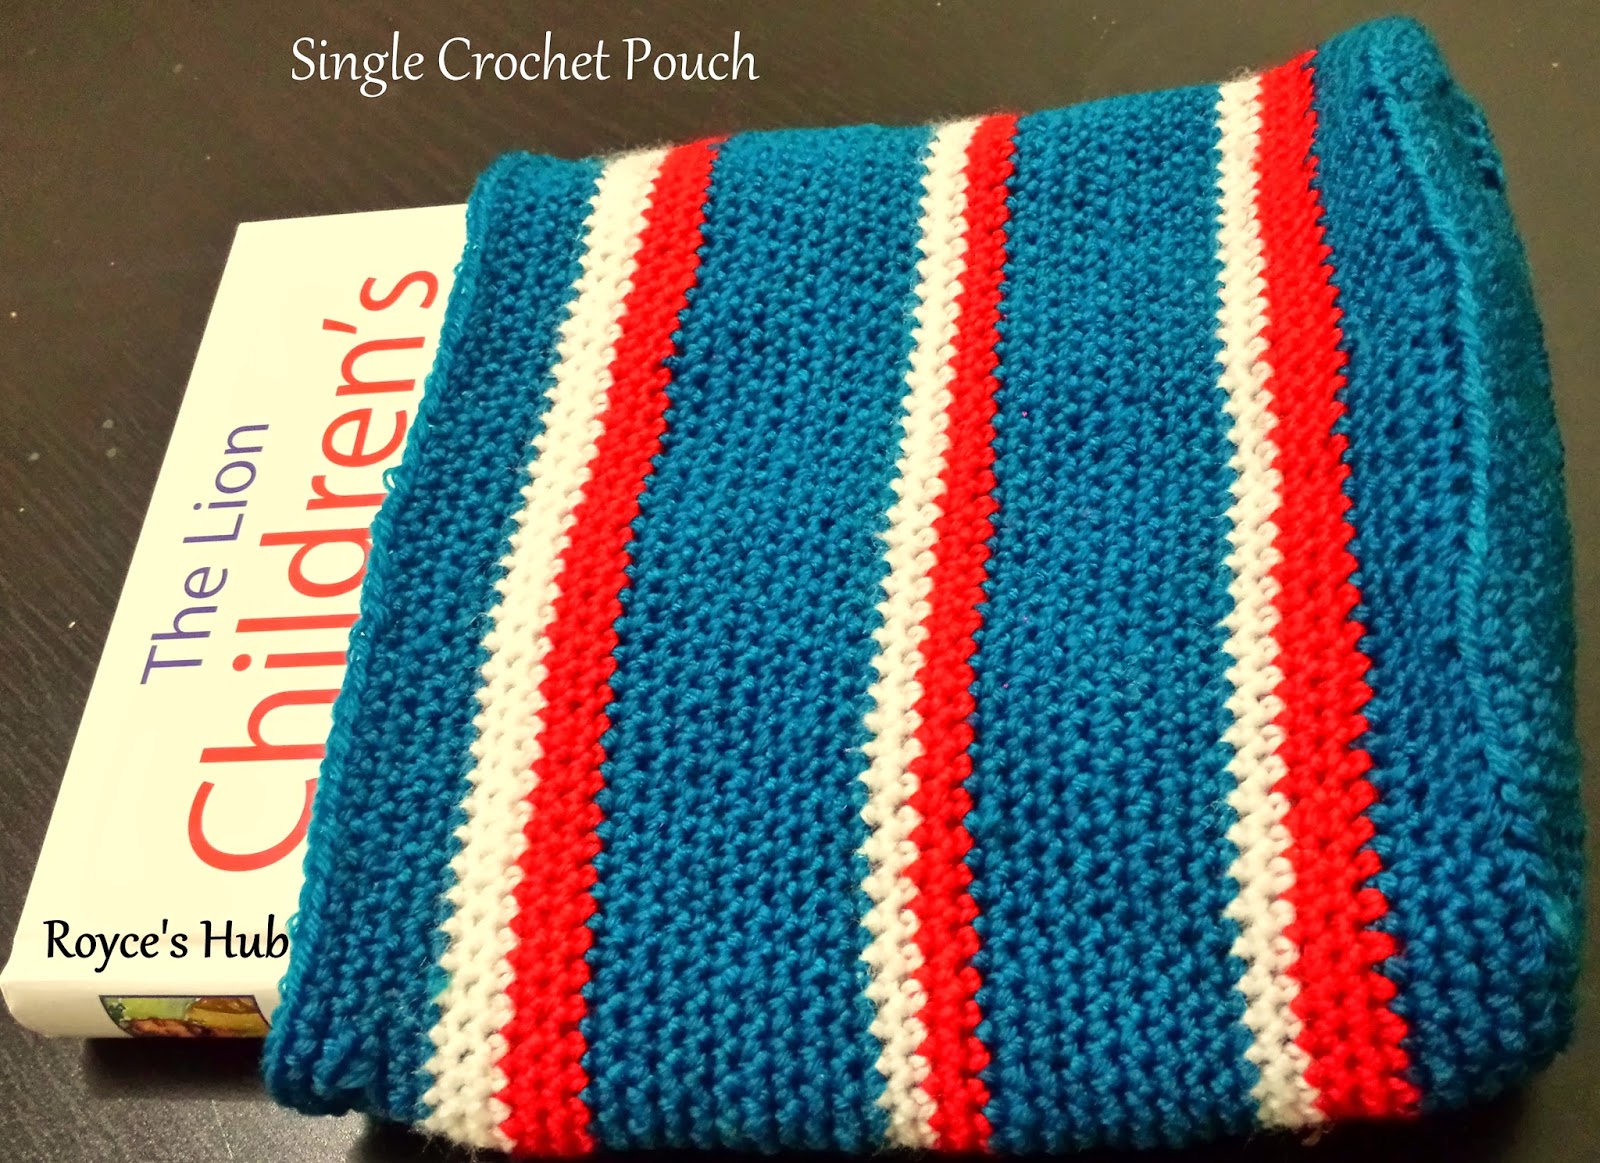 http://roycedavids.blogspot.ae/2014/11/single-crochet-pouch-project-for.html